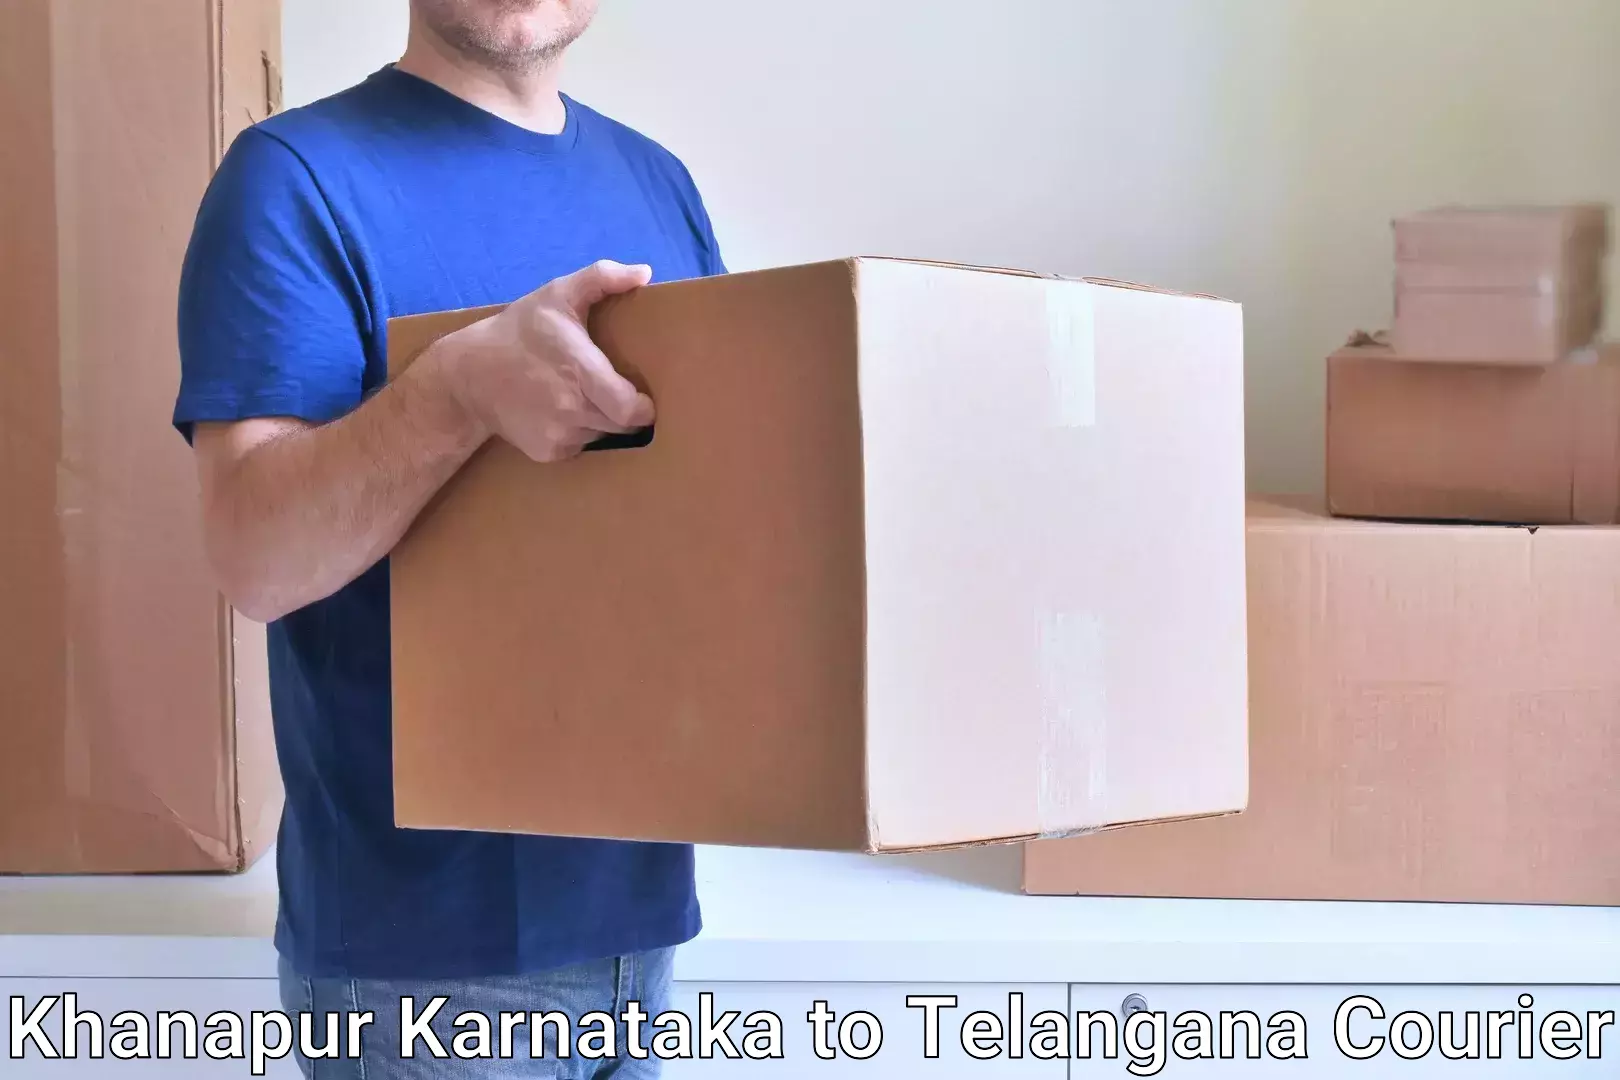 Global logistics network Khanapur Karnataka to Chegunta